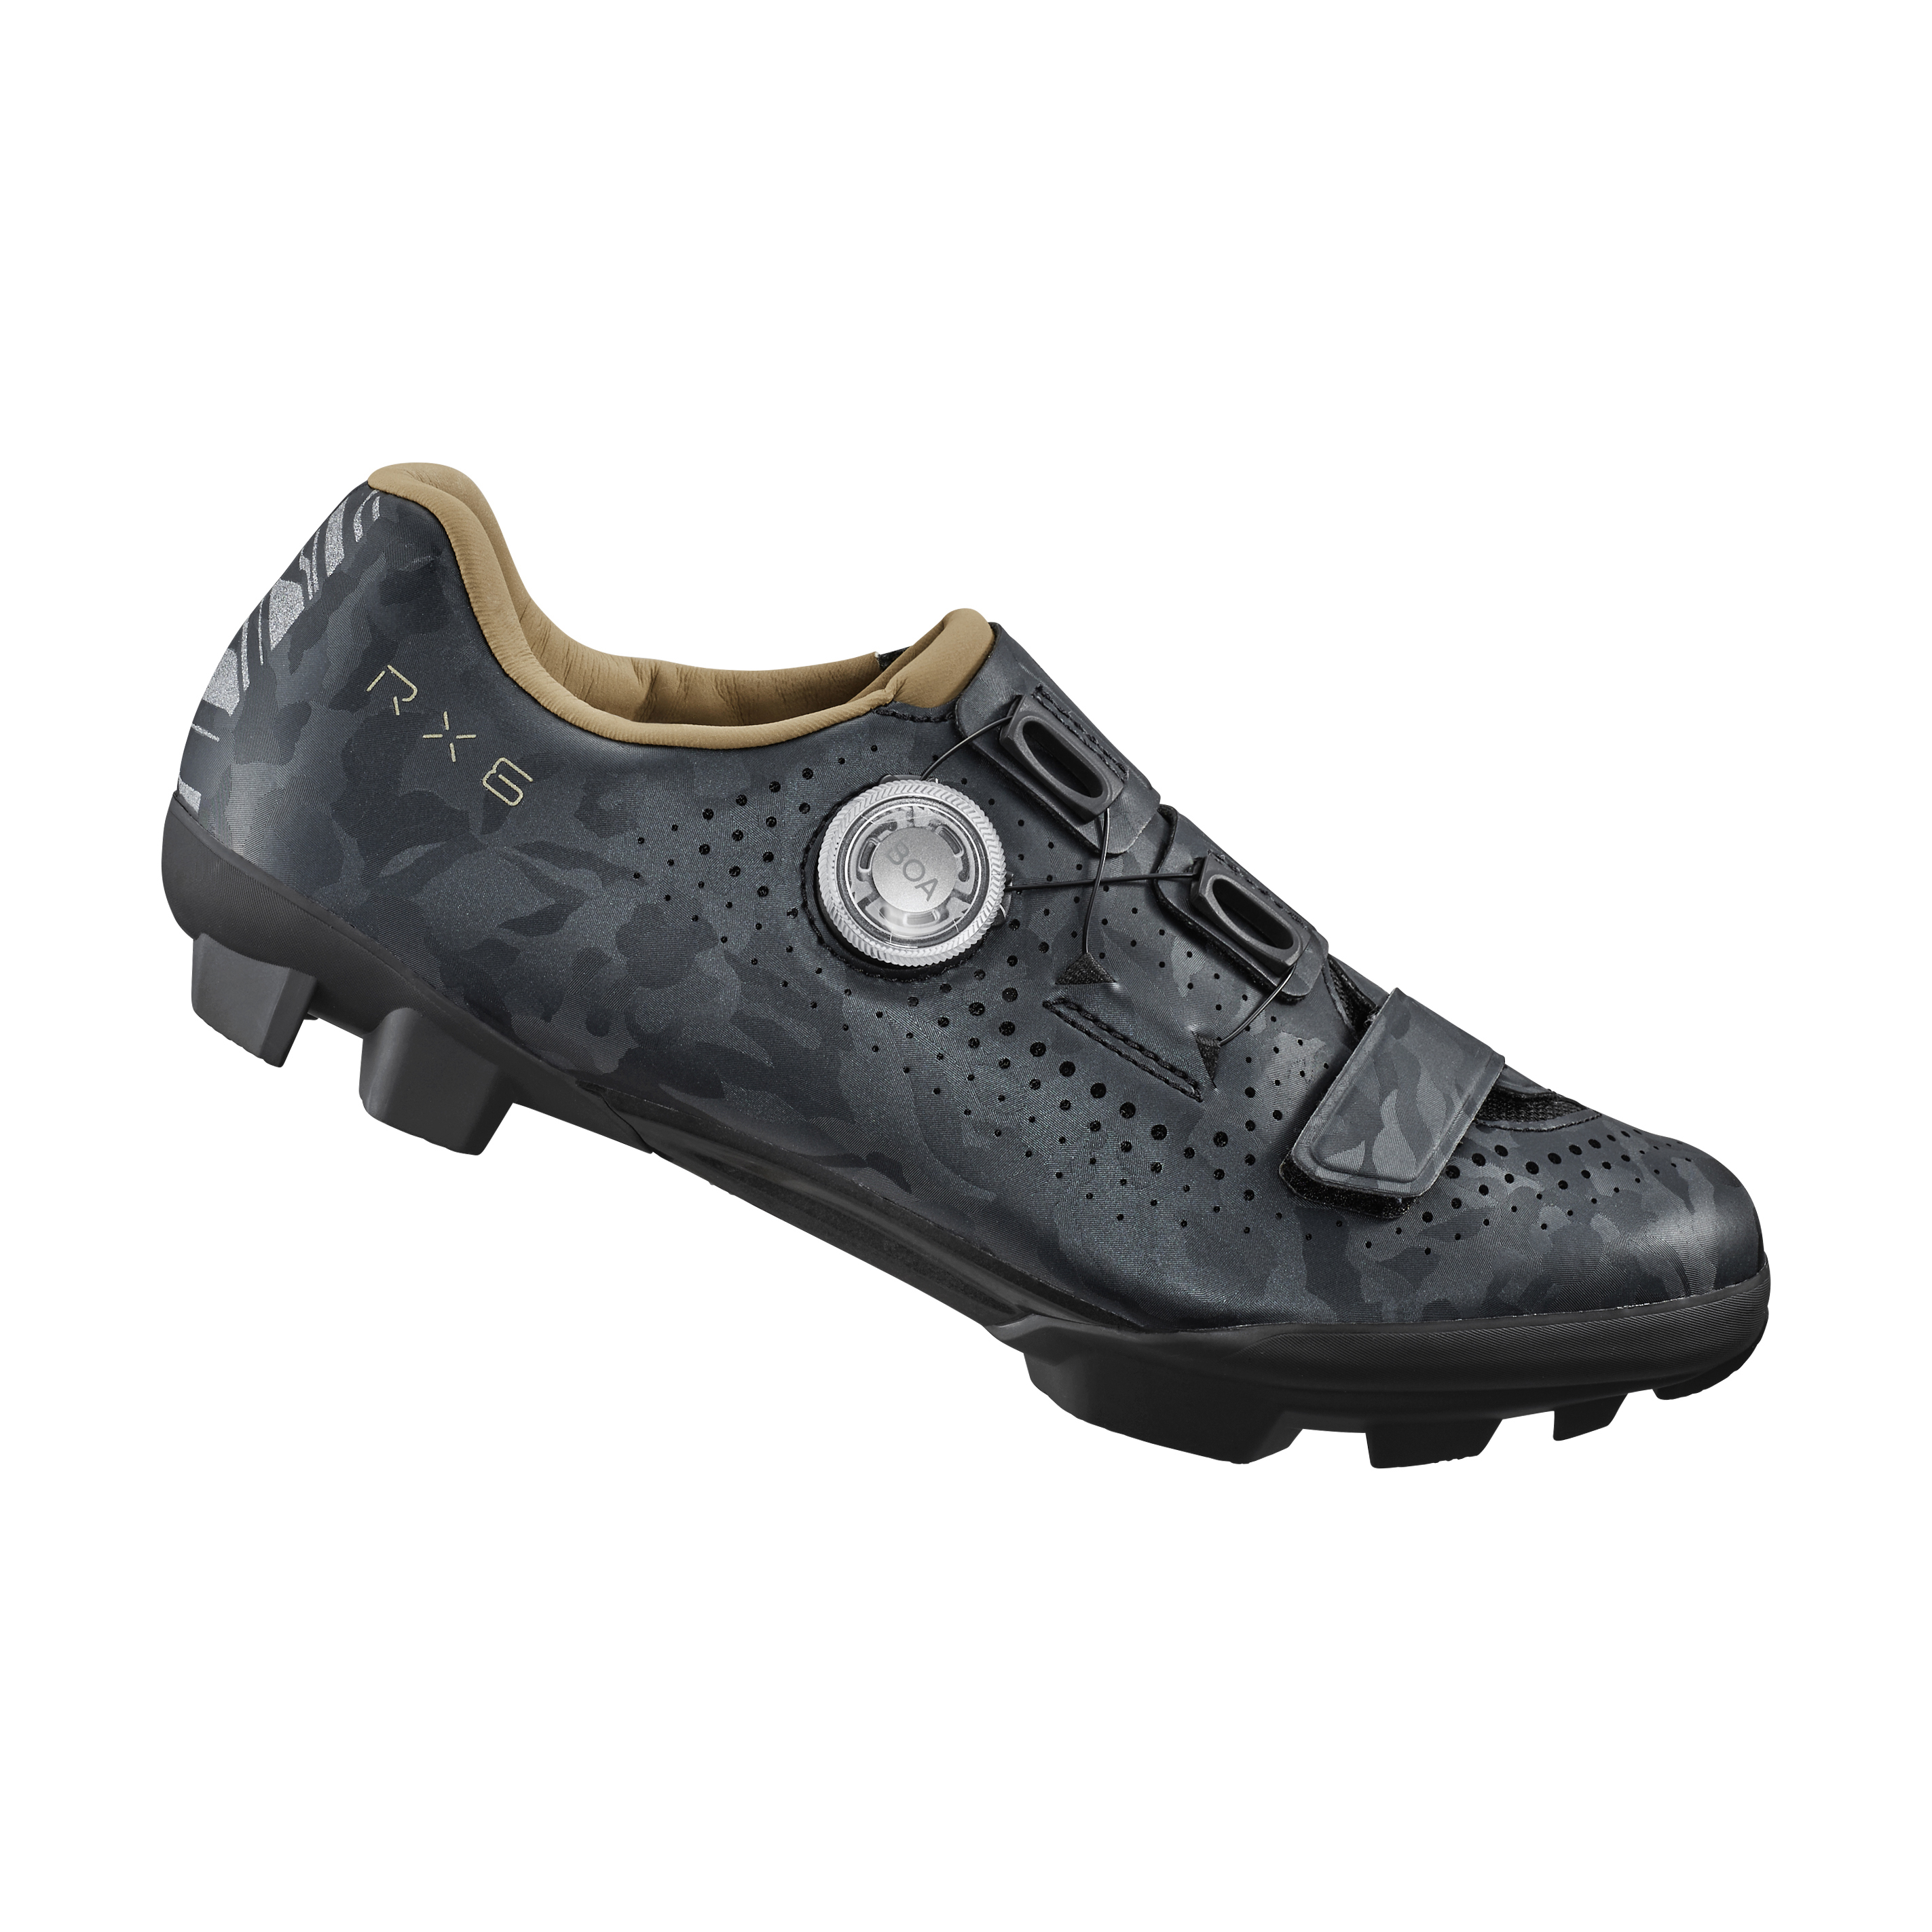 SHIMANO gravel obuv SH-RX600, dámská, šedá, 37